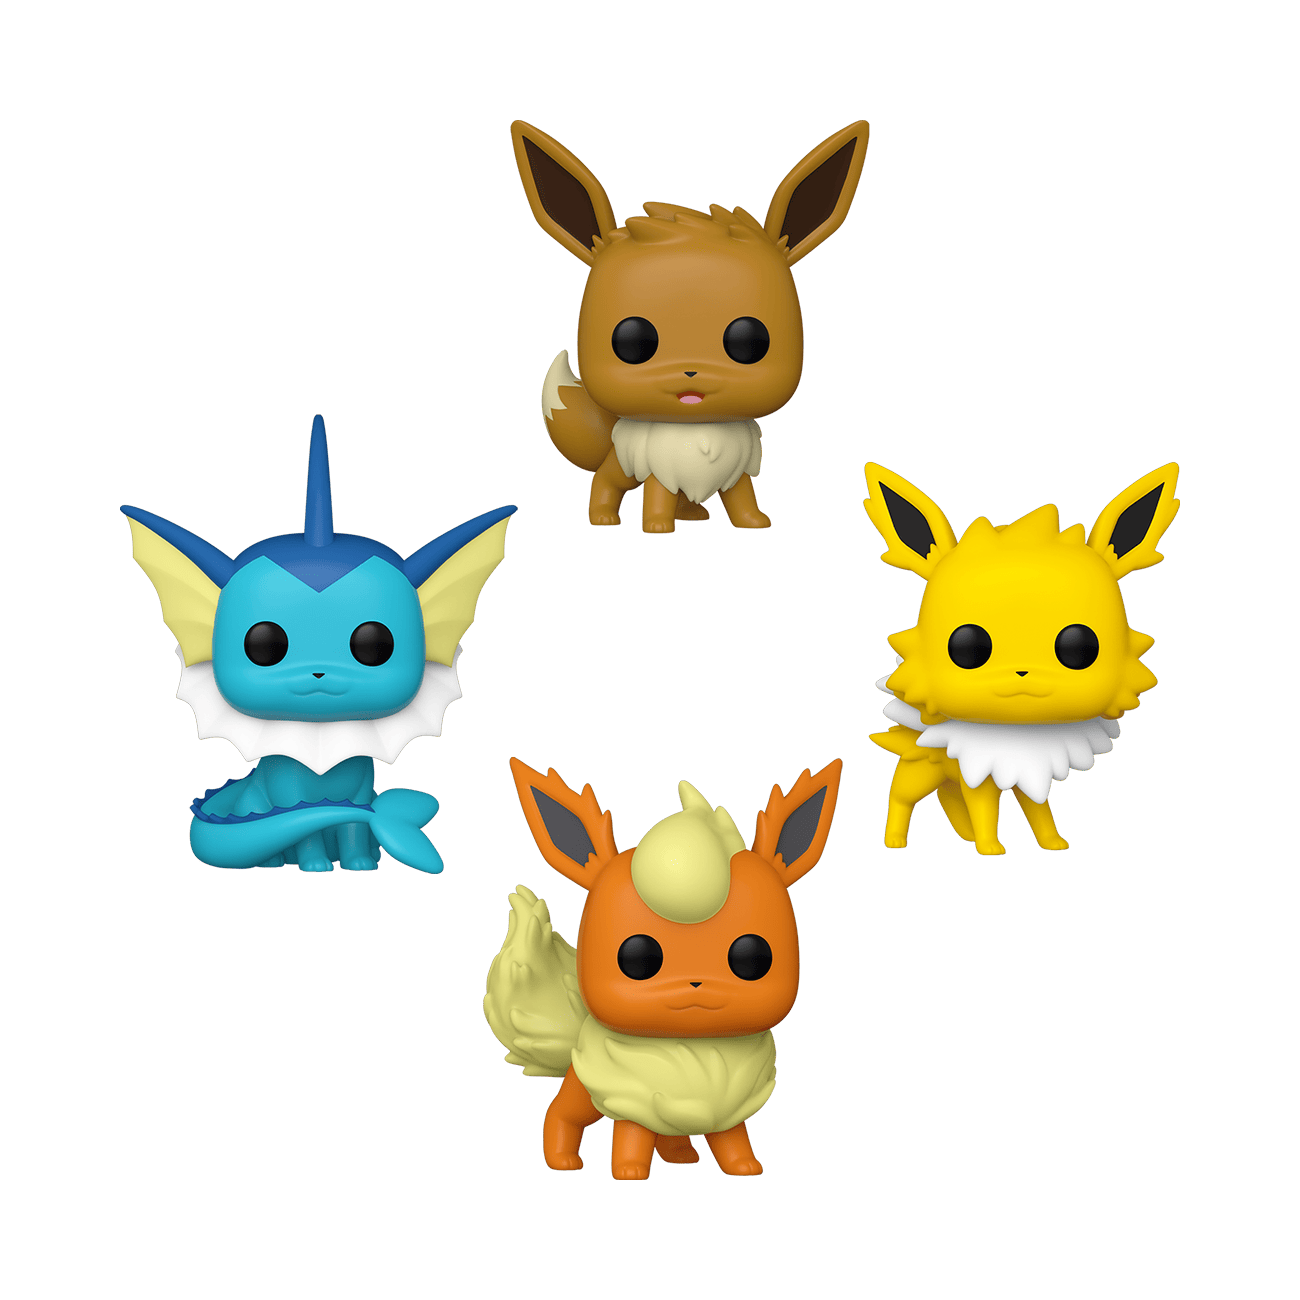 Buy Pop! Pokémon 4-Pack at Funko.